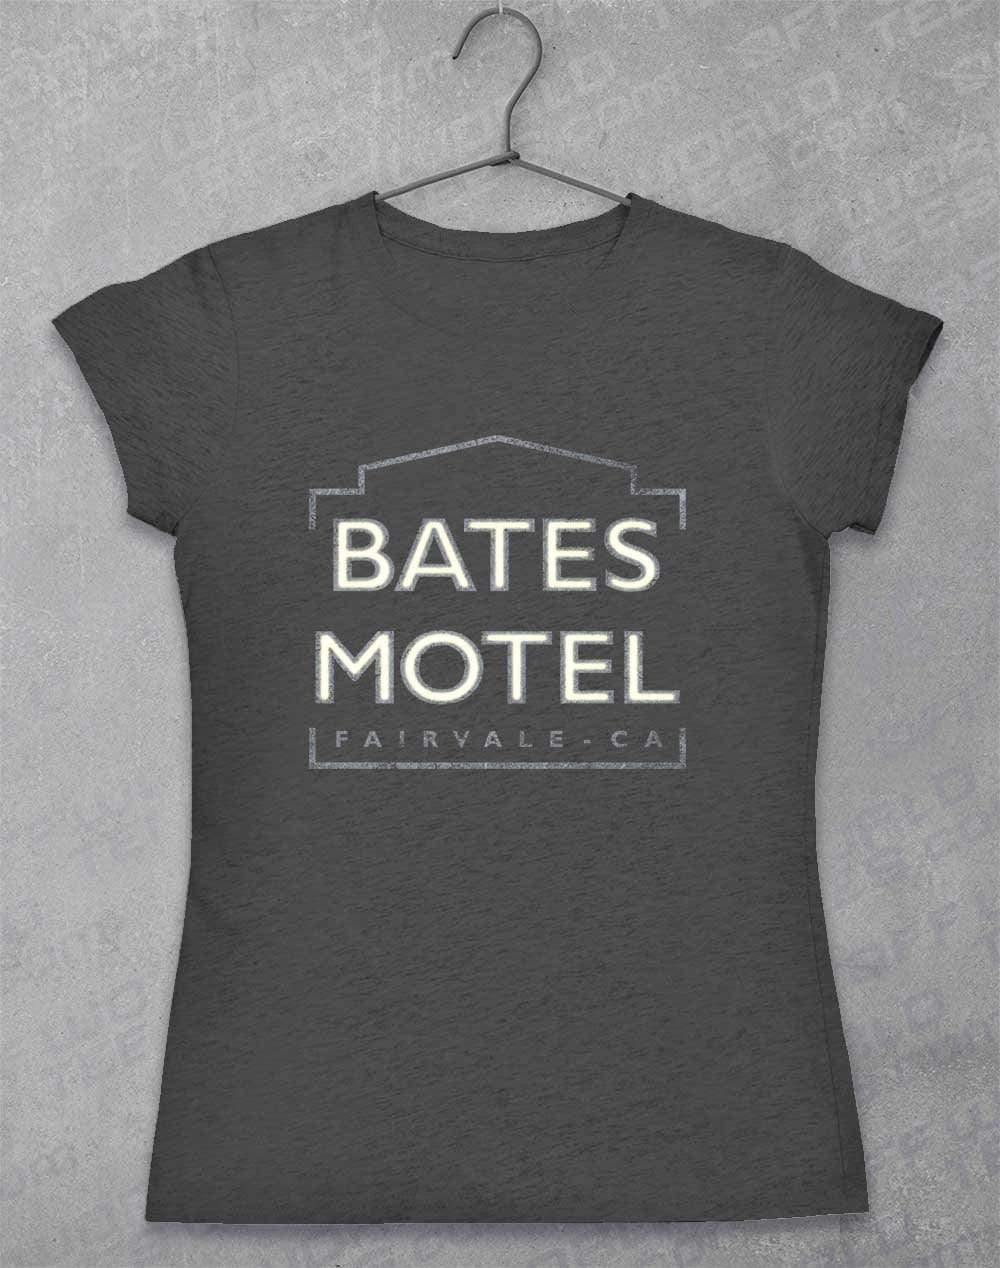 Bates Motel Sign Womens T-Shirt 8-10 / Dark Heather  - Off World Tees